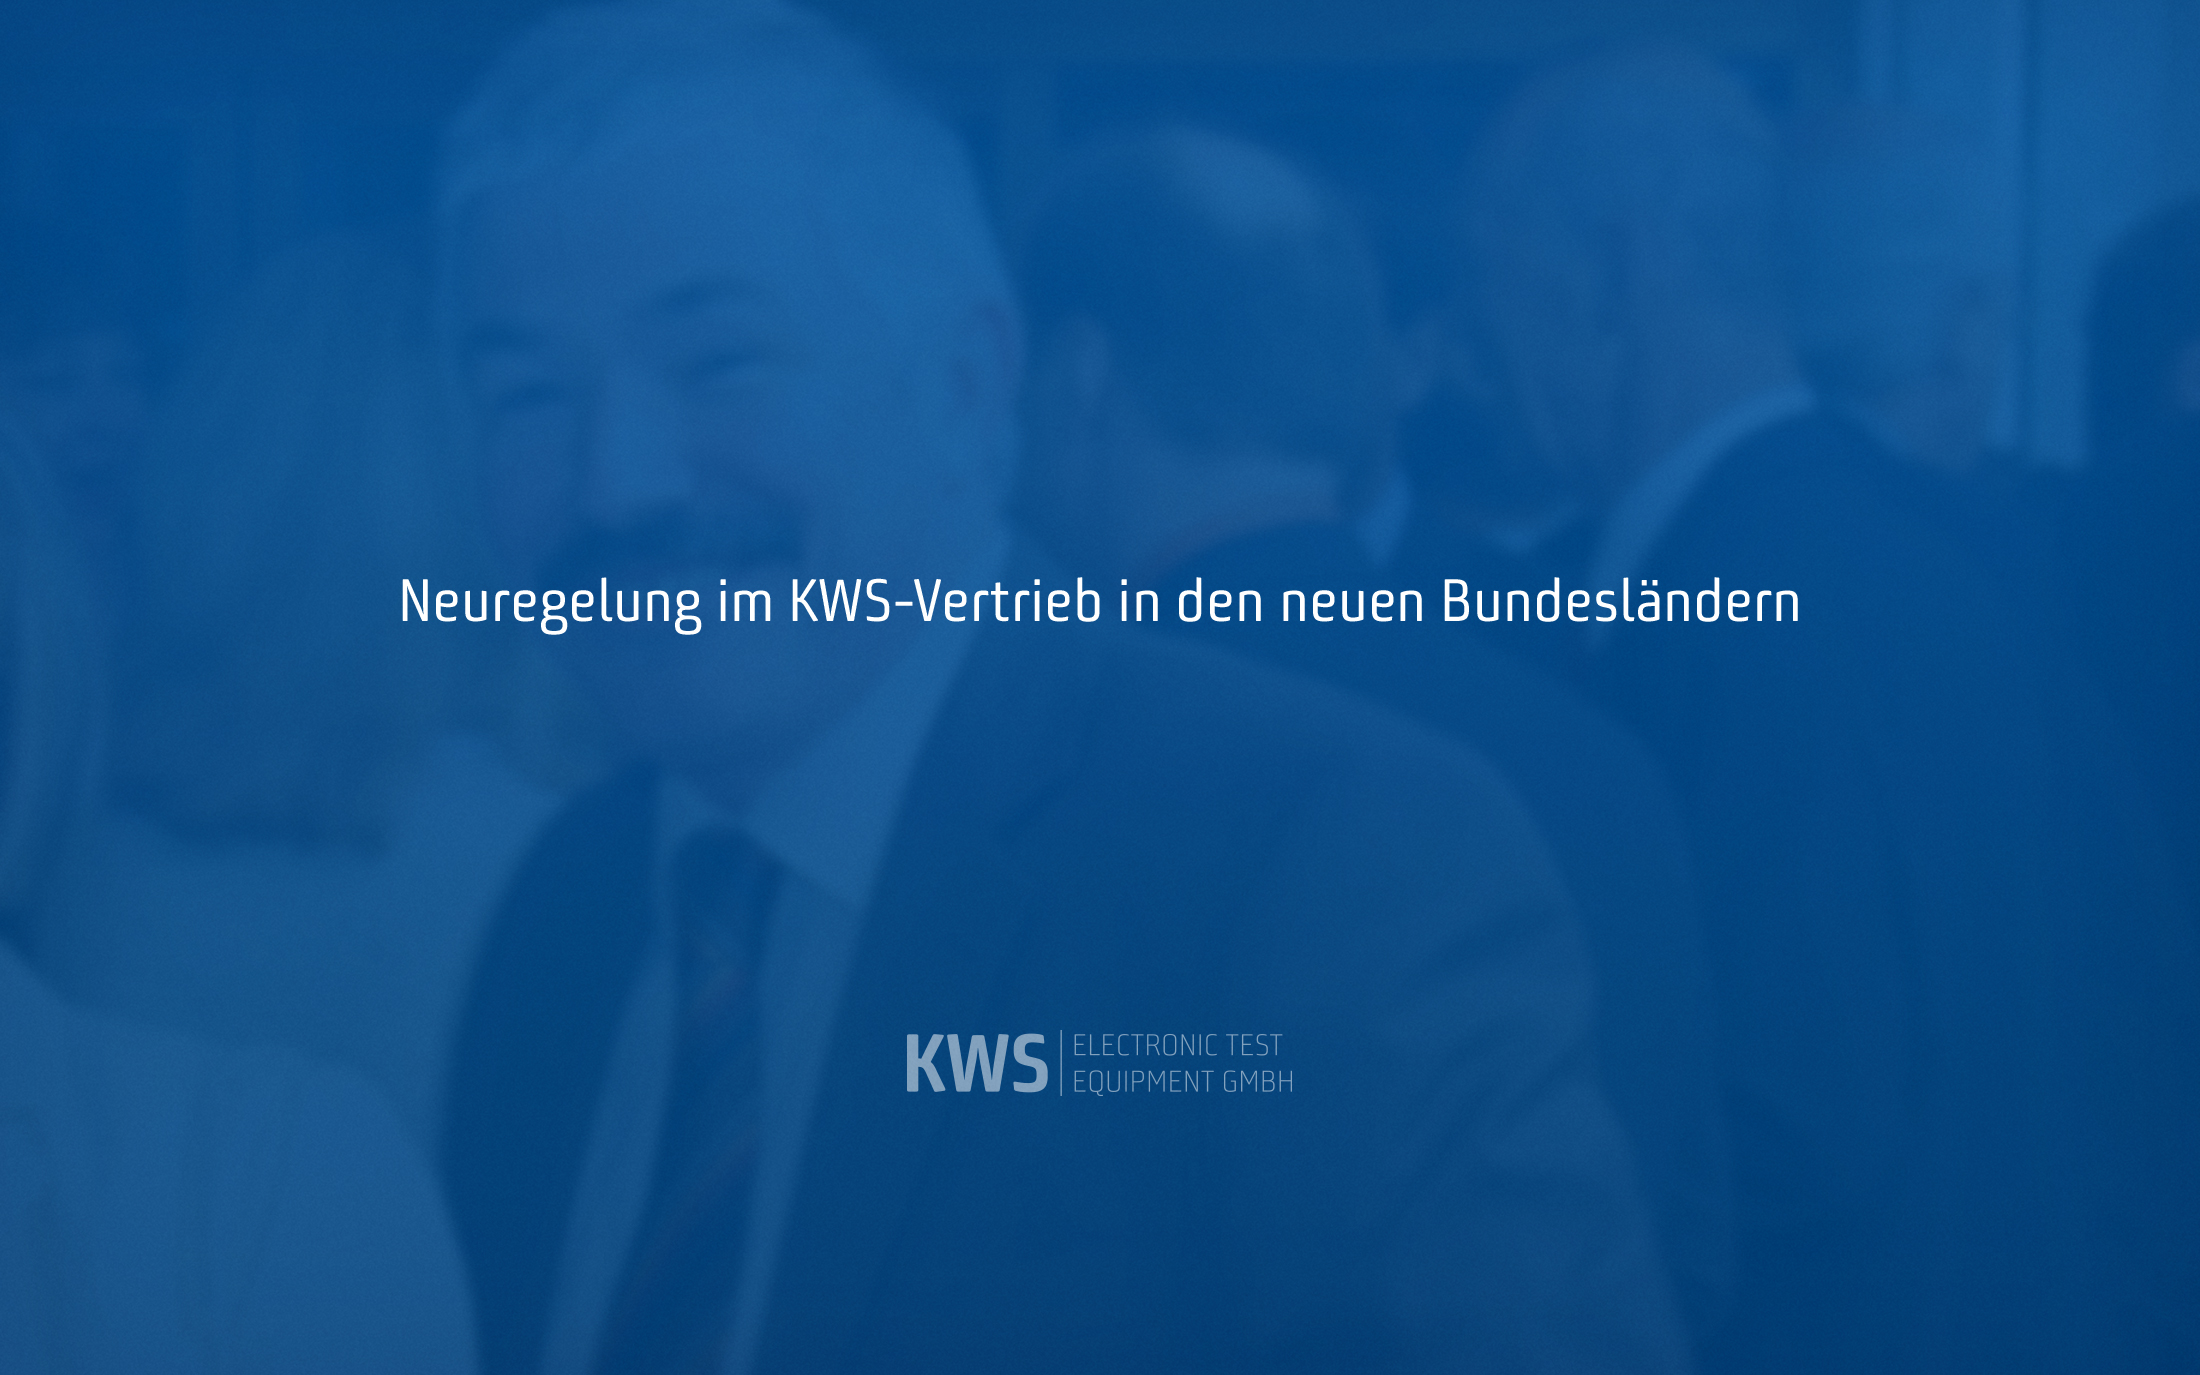 KWS Electronic News 2021: Neuregelung im KWS-Vertrieb in den neuen Bundesländern